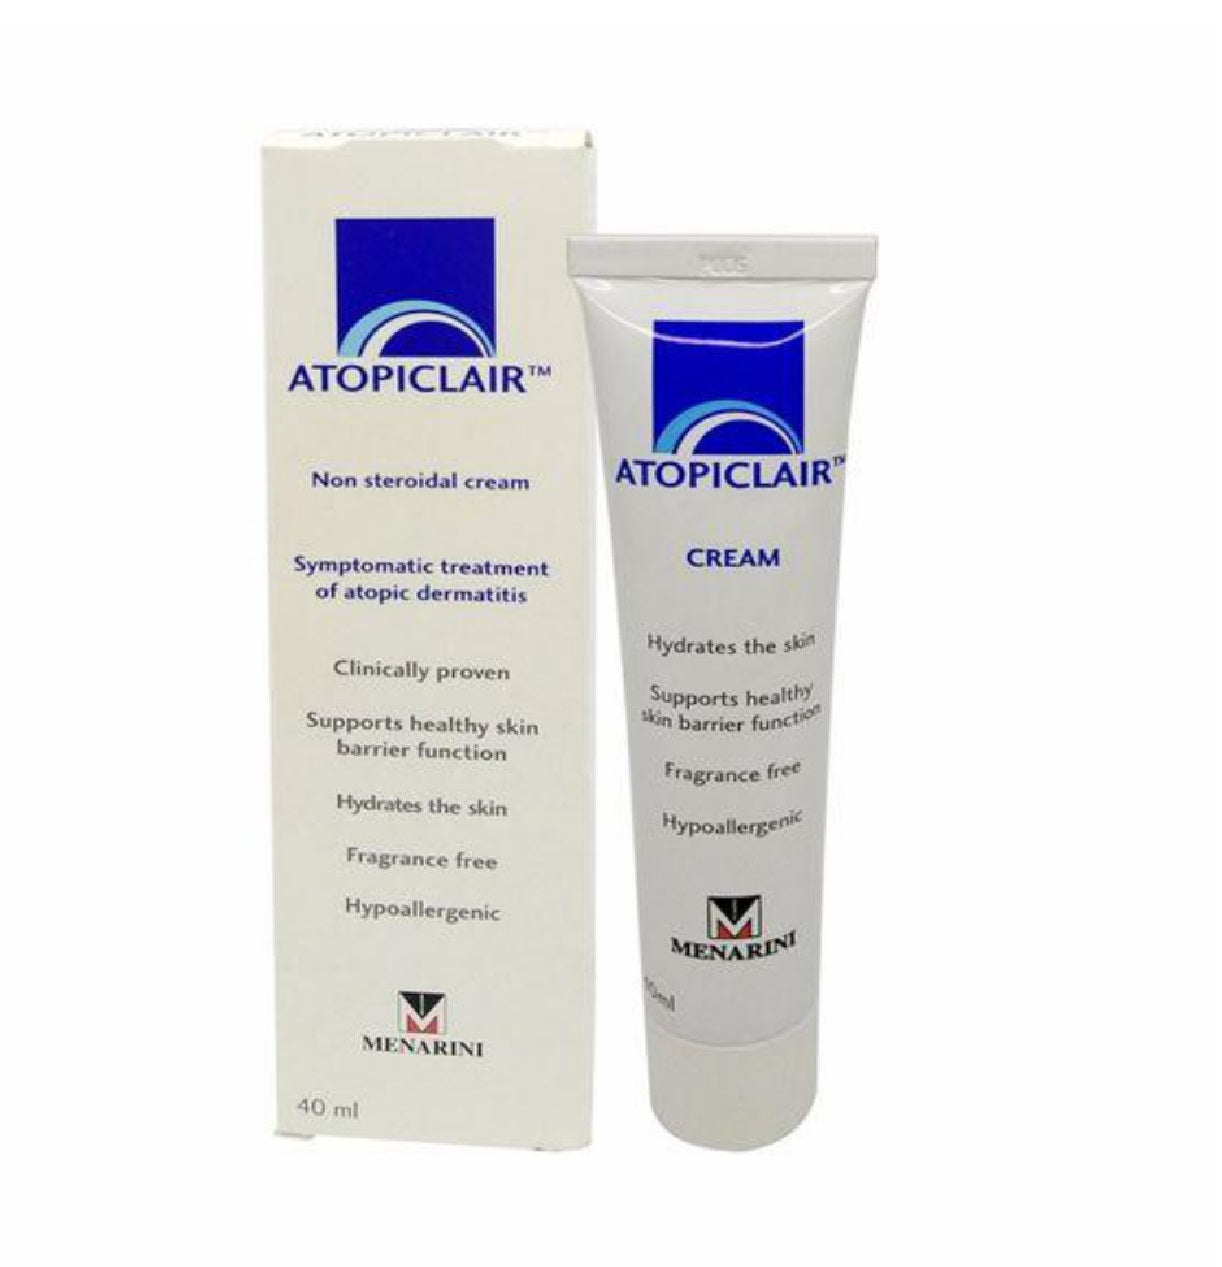 Atopiclair Non Steroidal Cream 40mL